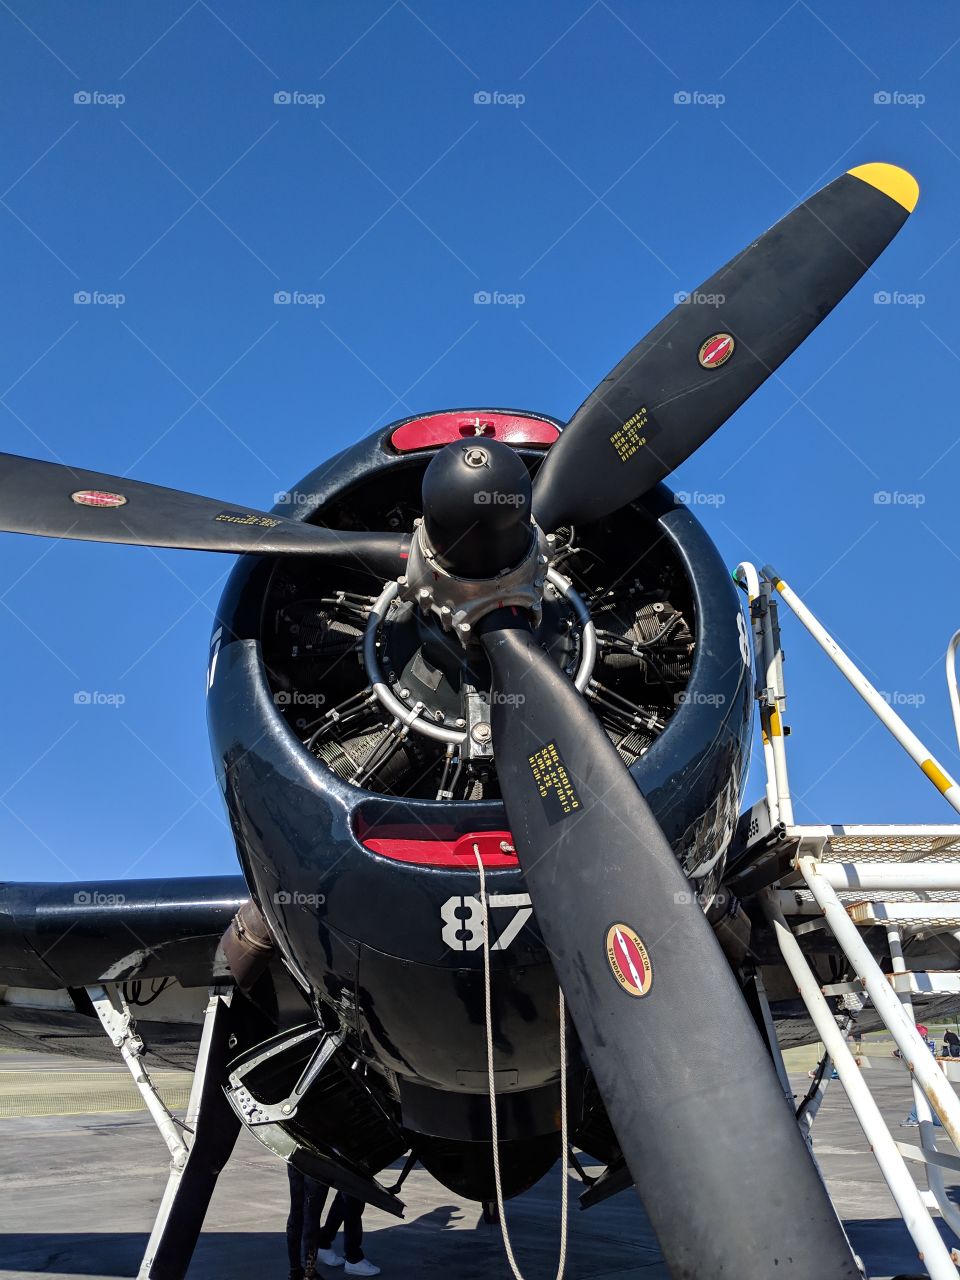 Airplane propeller shot. Black plane propellers. Aeronautical. Airshow.